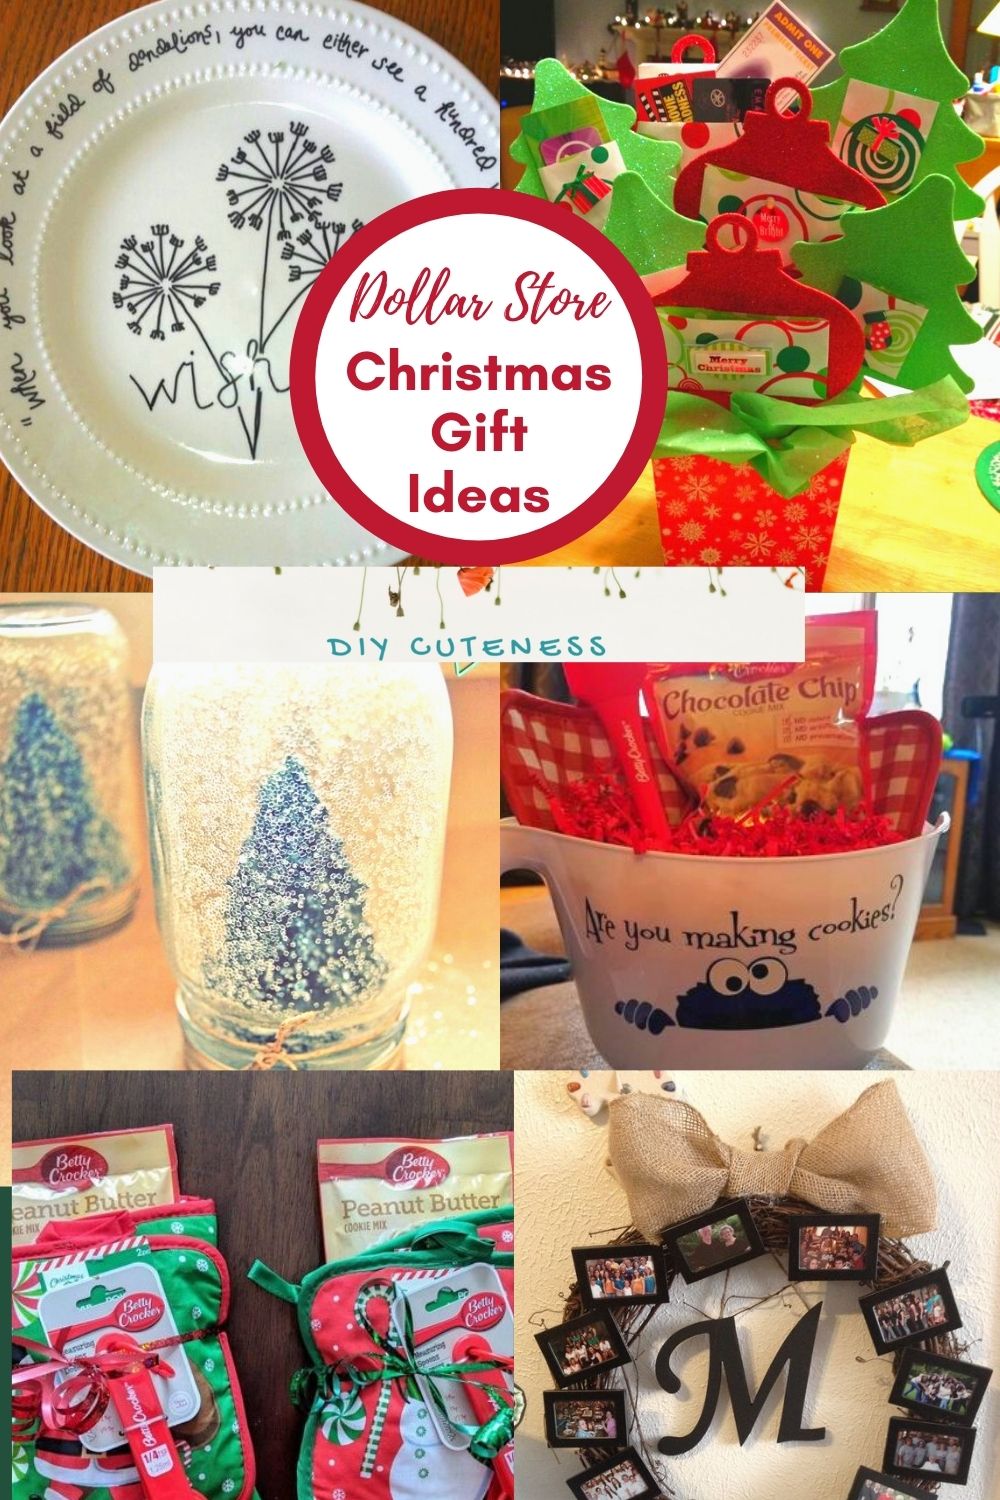 Dollar Store Christmas Gift Ideas